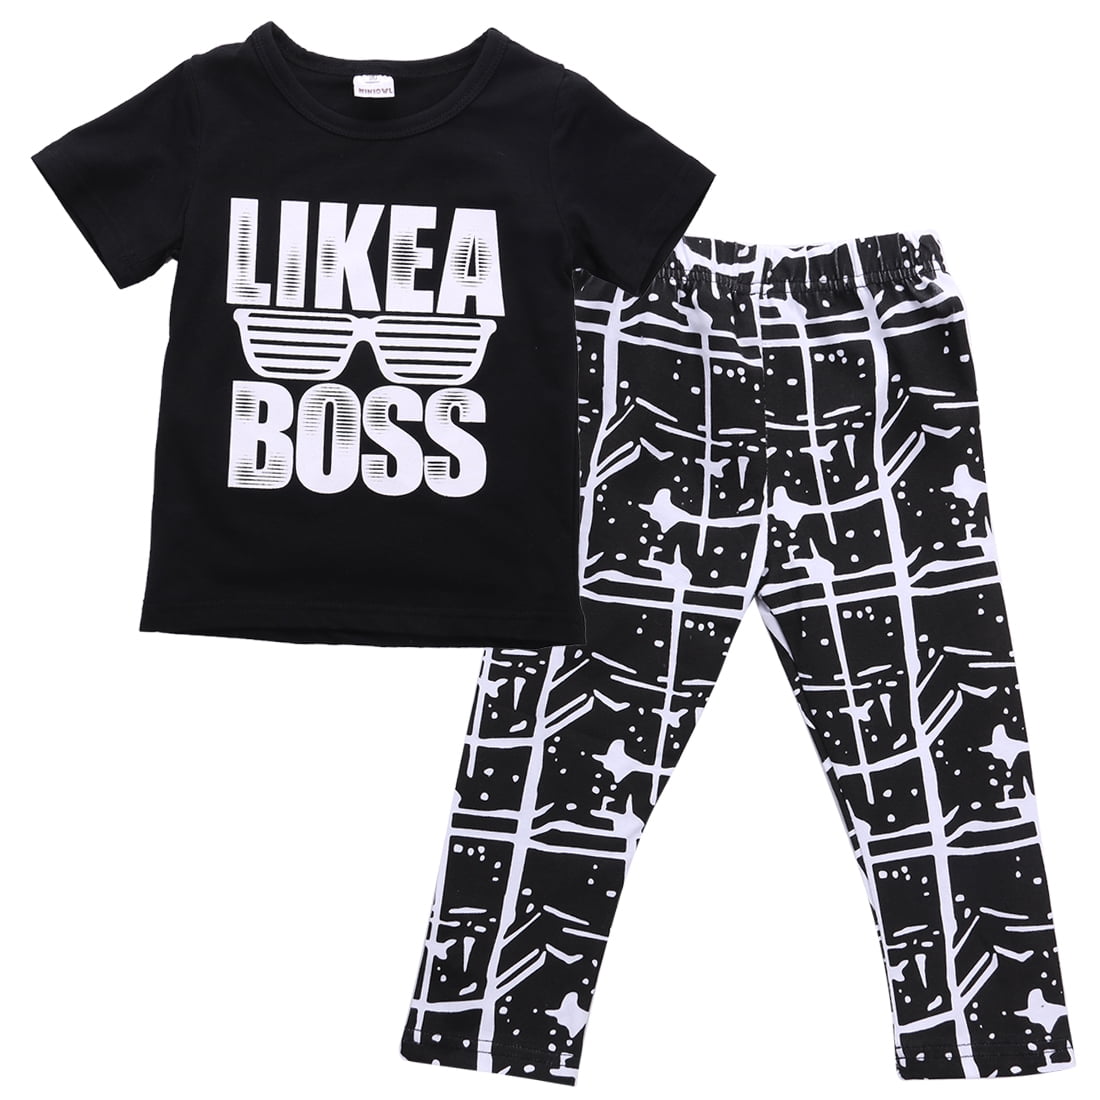 Floss Like a Boss T Shirt and Pants for Boys Black White Cotton Short Pajamas Pants Set 